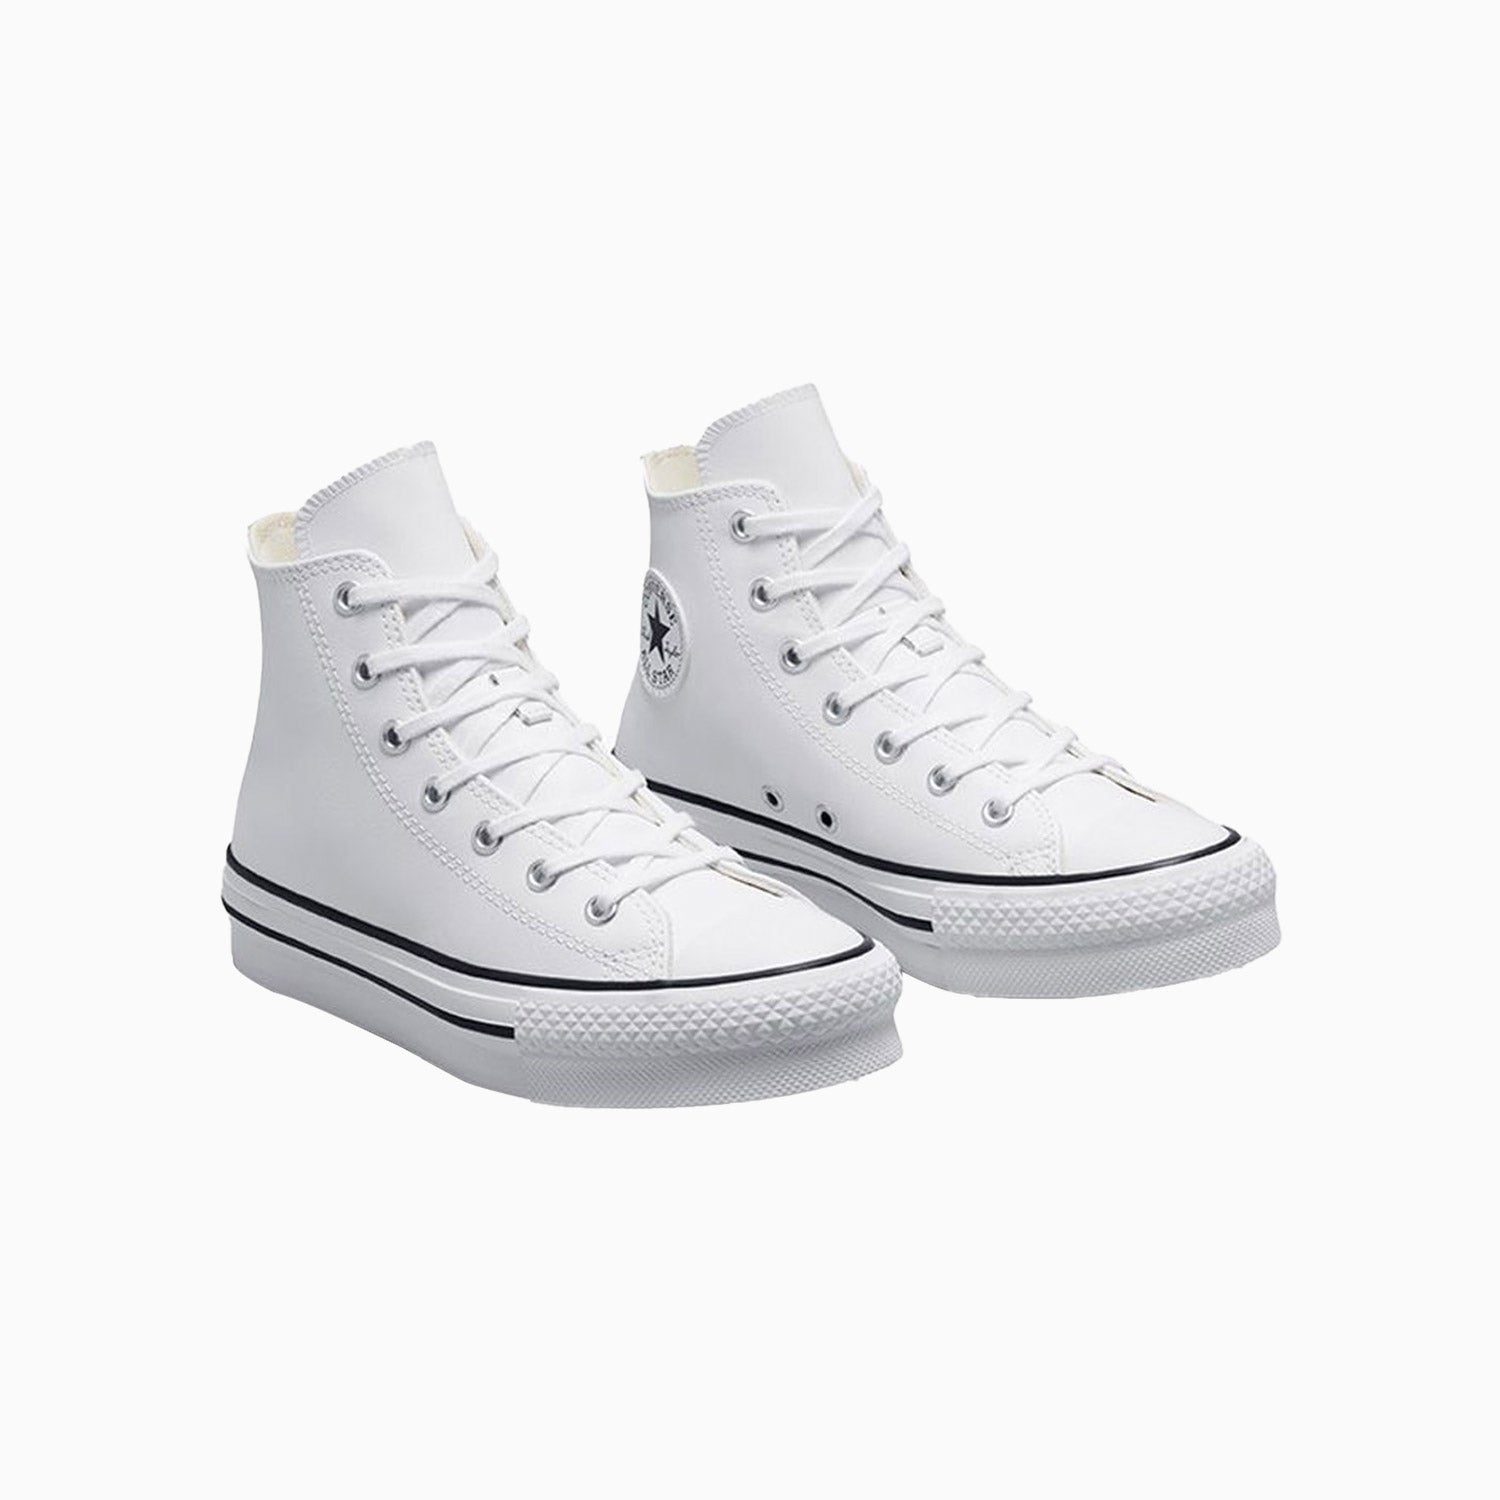 converse-kids-chuck-taylor-all-star-lift-platform-leather-shoes-a02486c